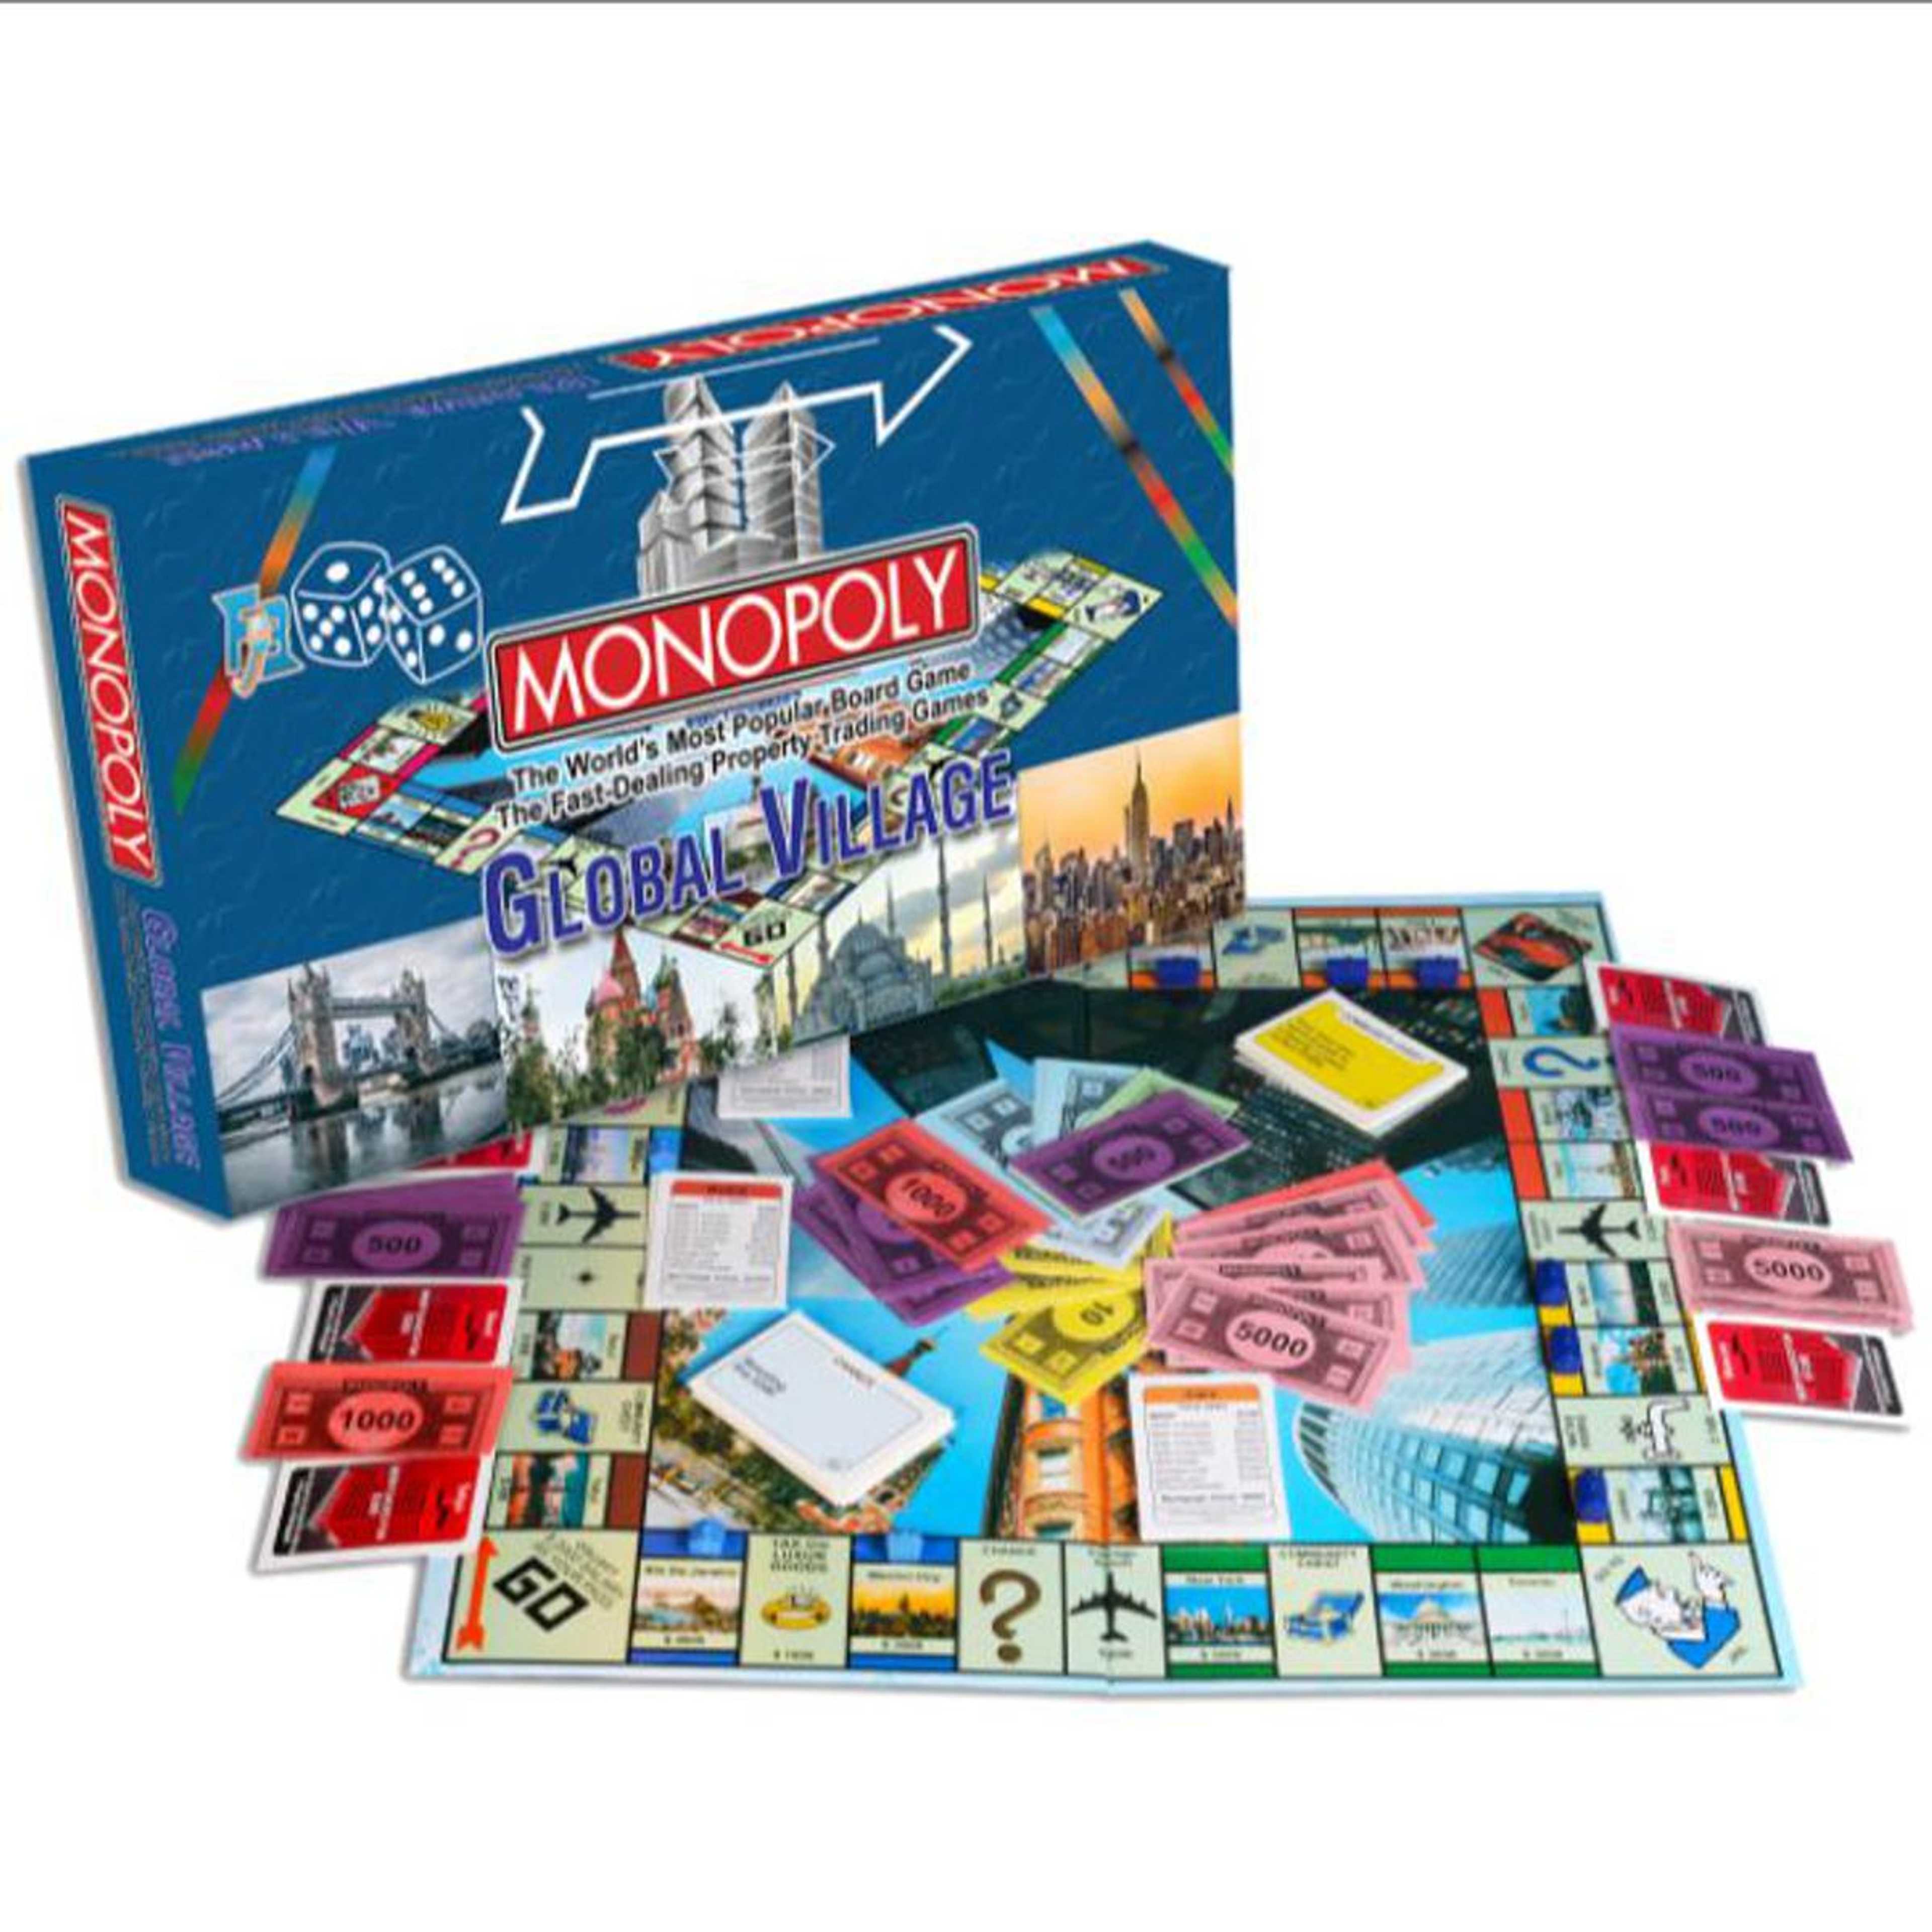 Monopoly Global Village Property Trading Game Original - Monopoly Plus Ludo 2 in 1 Premium Quality